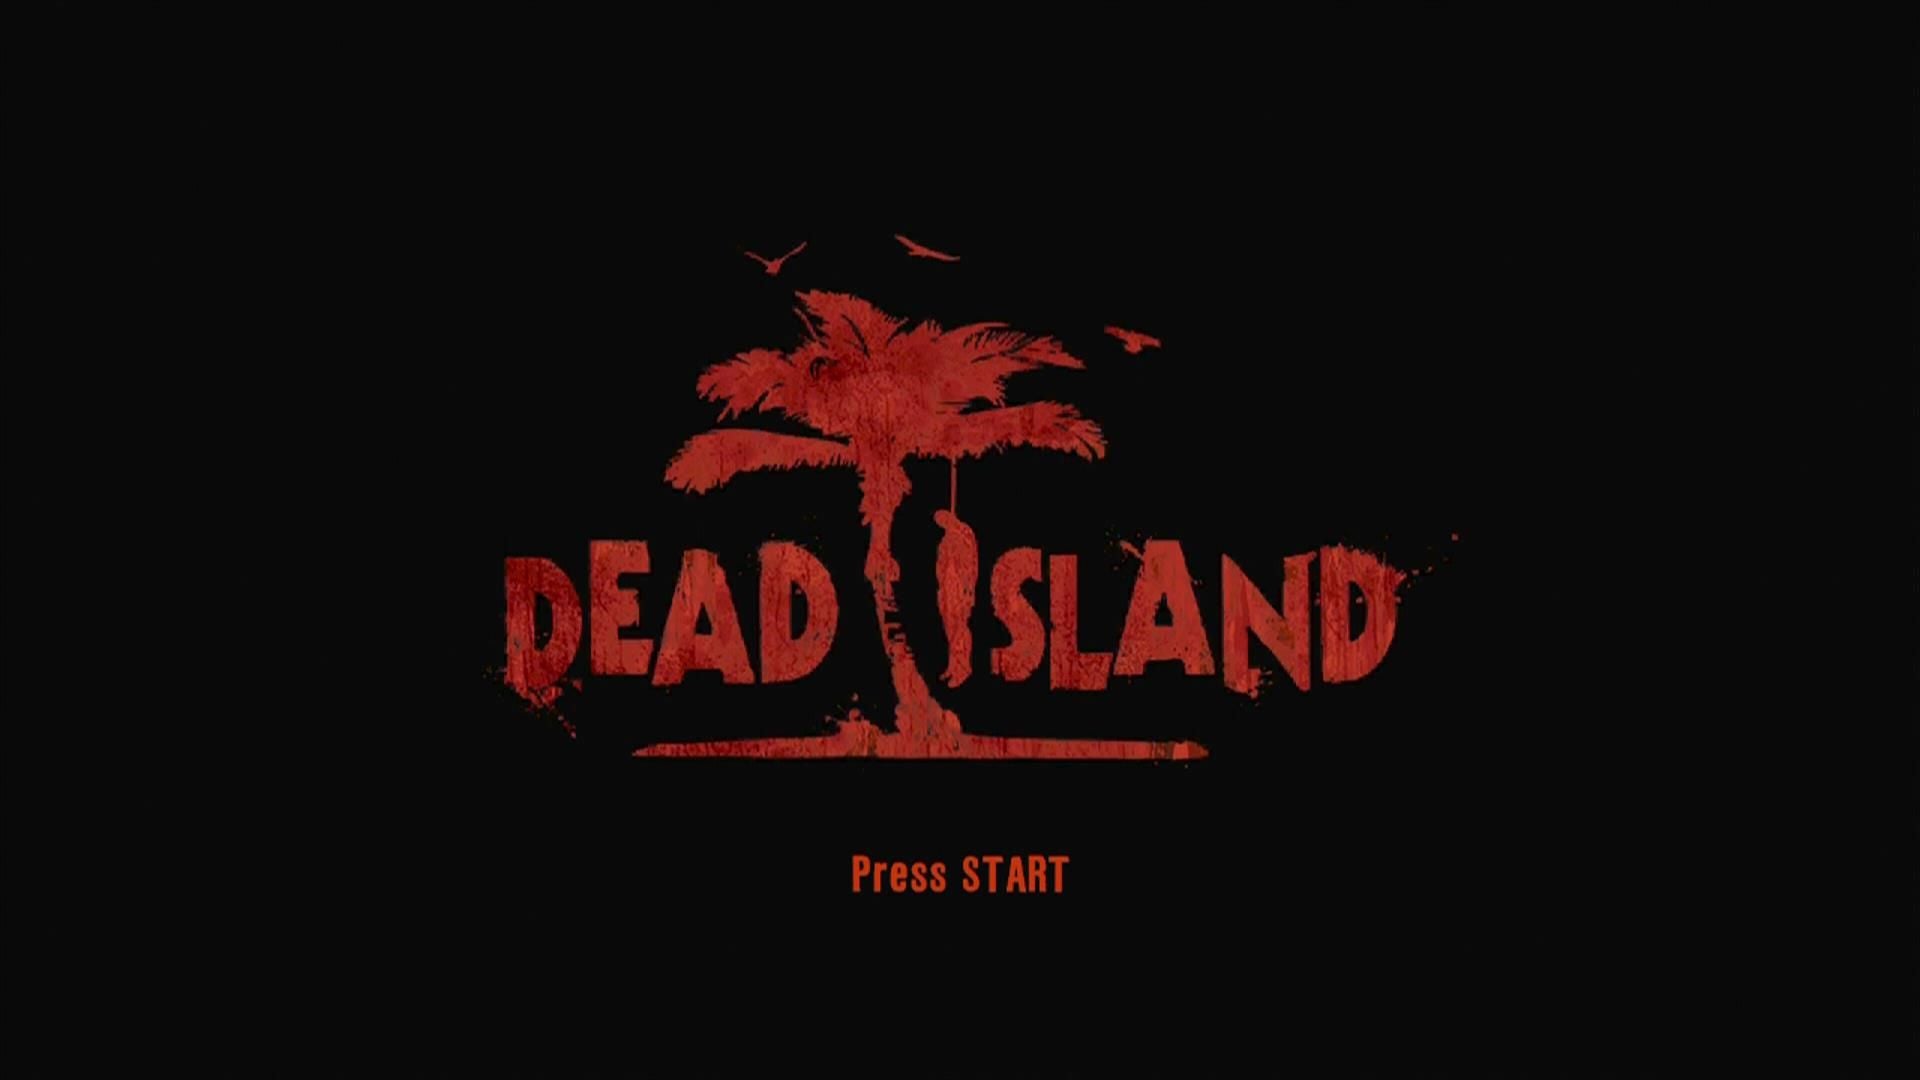 Dead Island - Xbox 360 Game